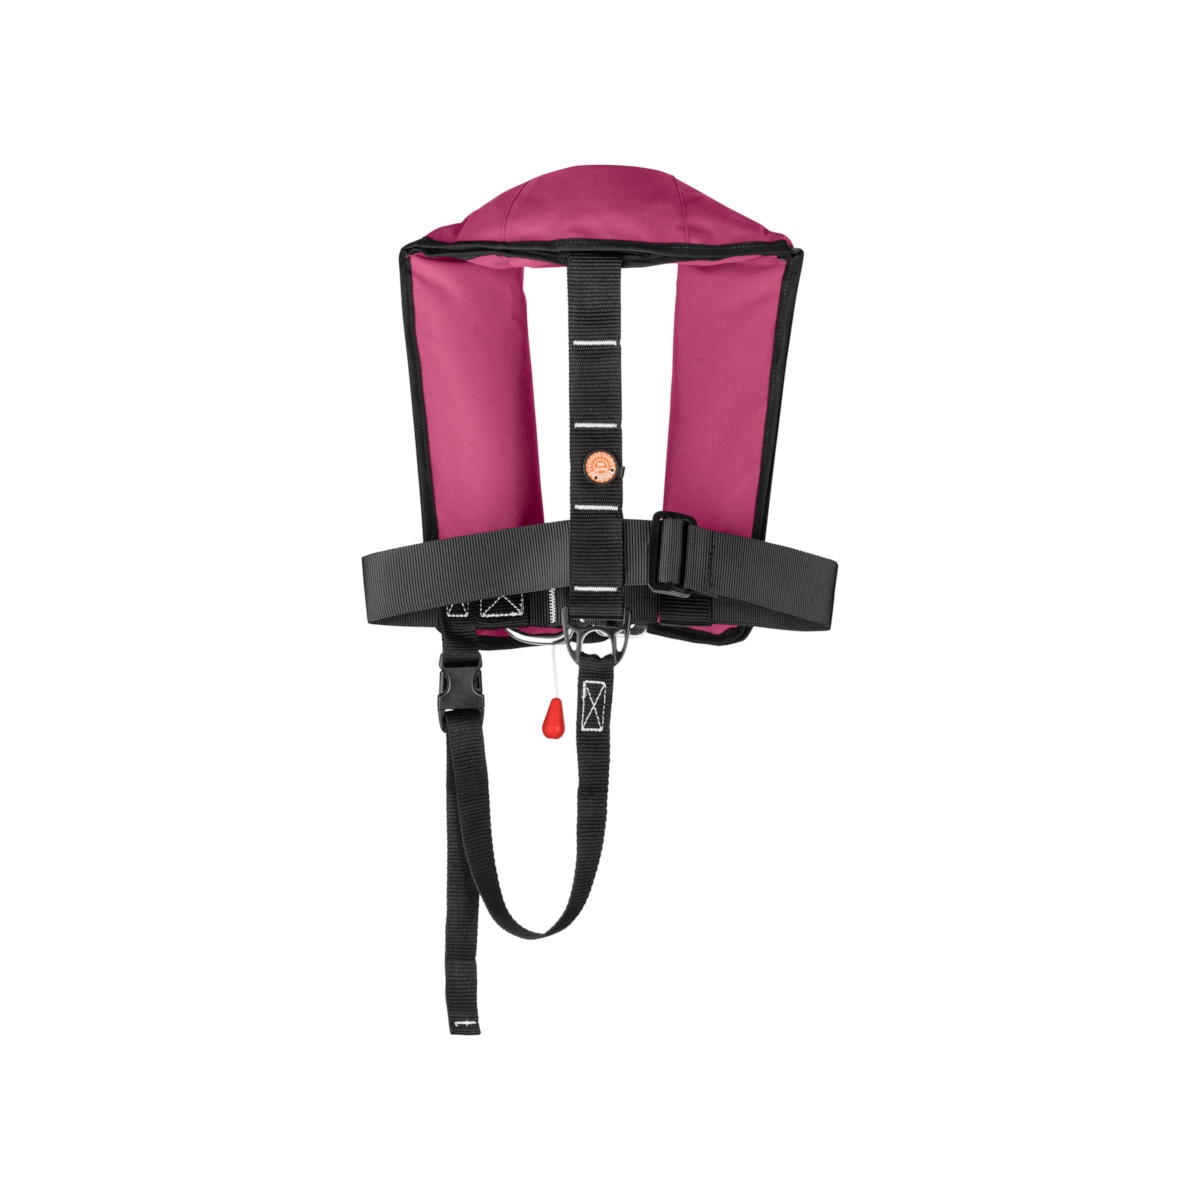 12skipper Kinder-Automatikweste 150N ISO mit Harness, pink